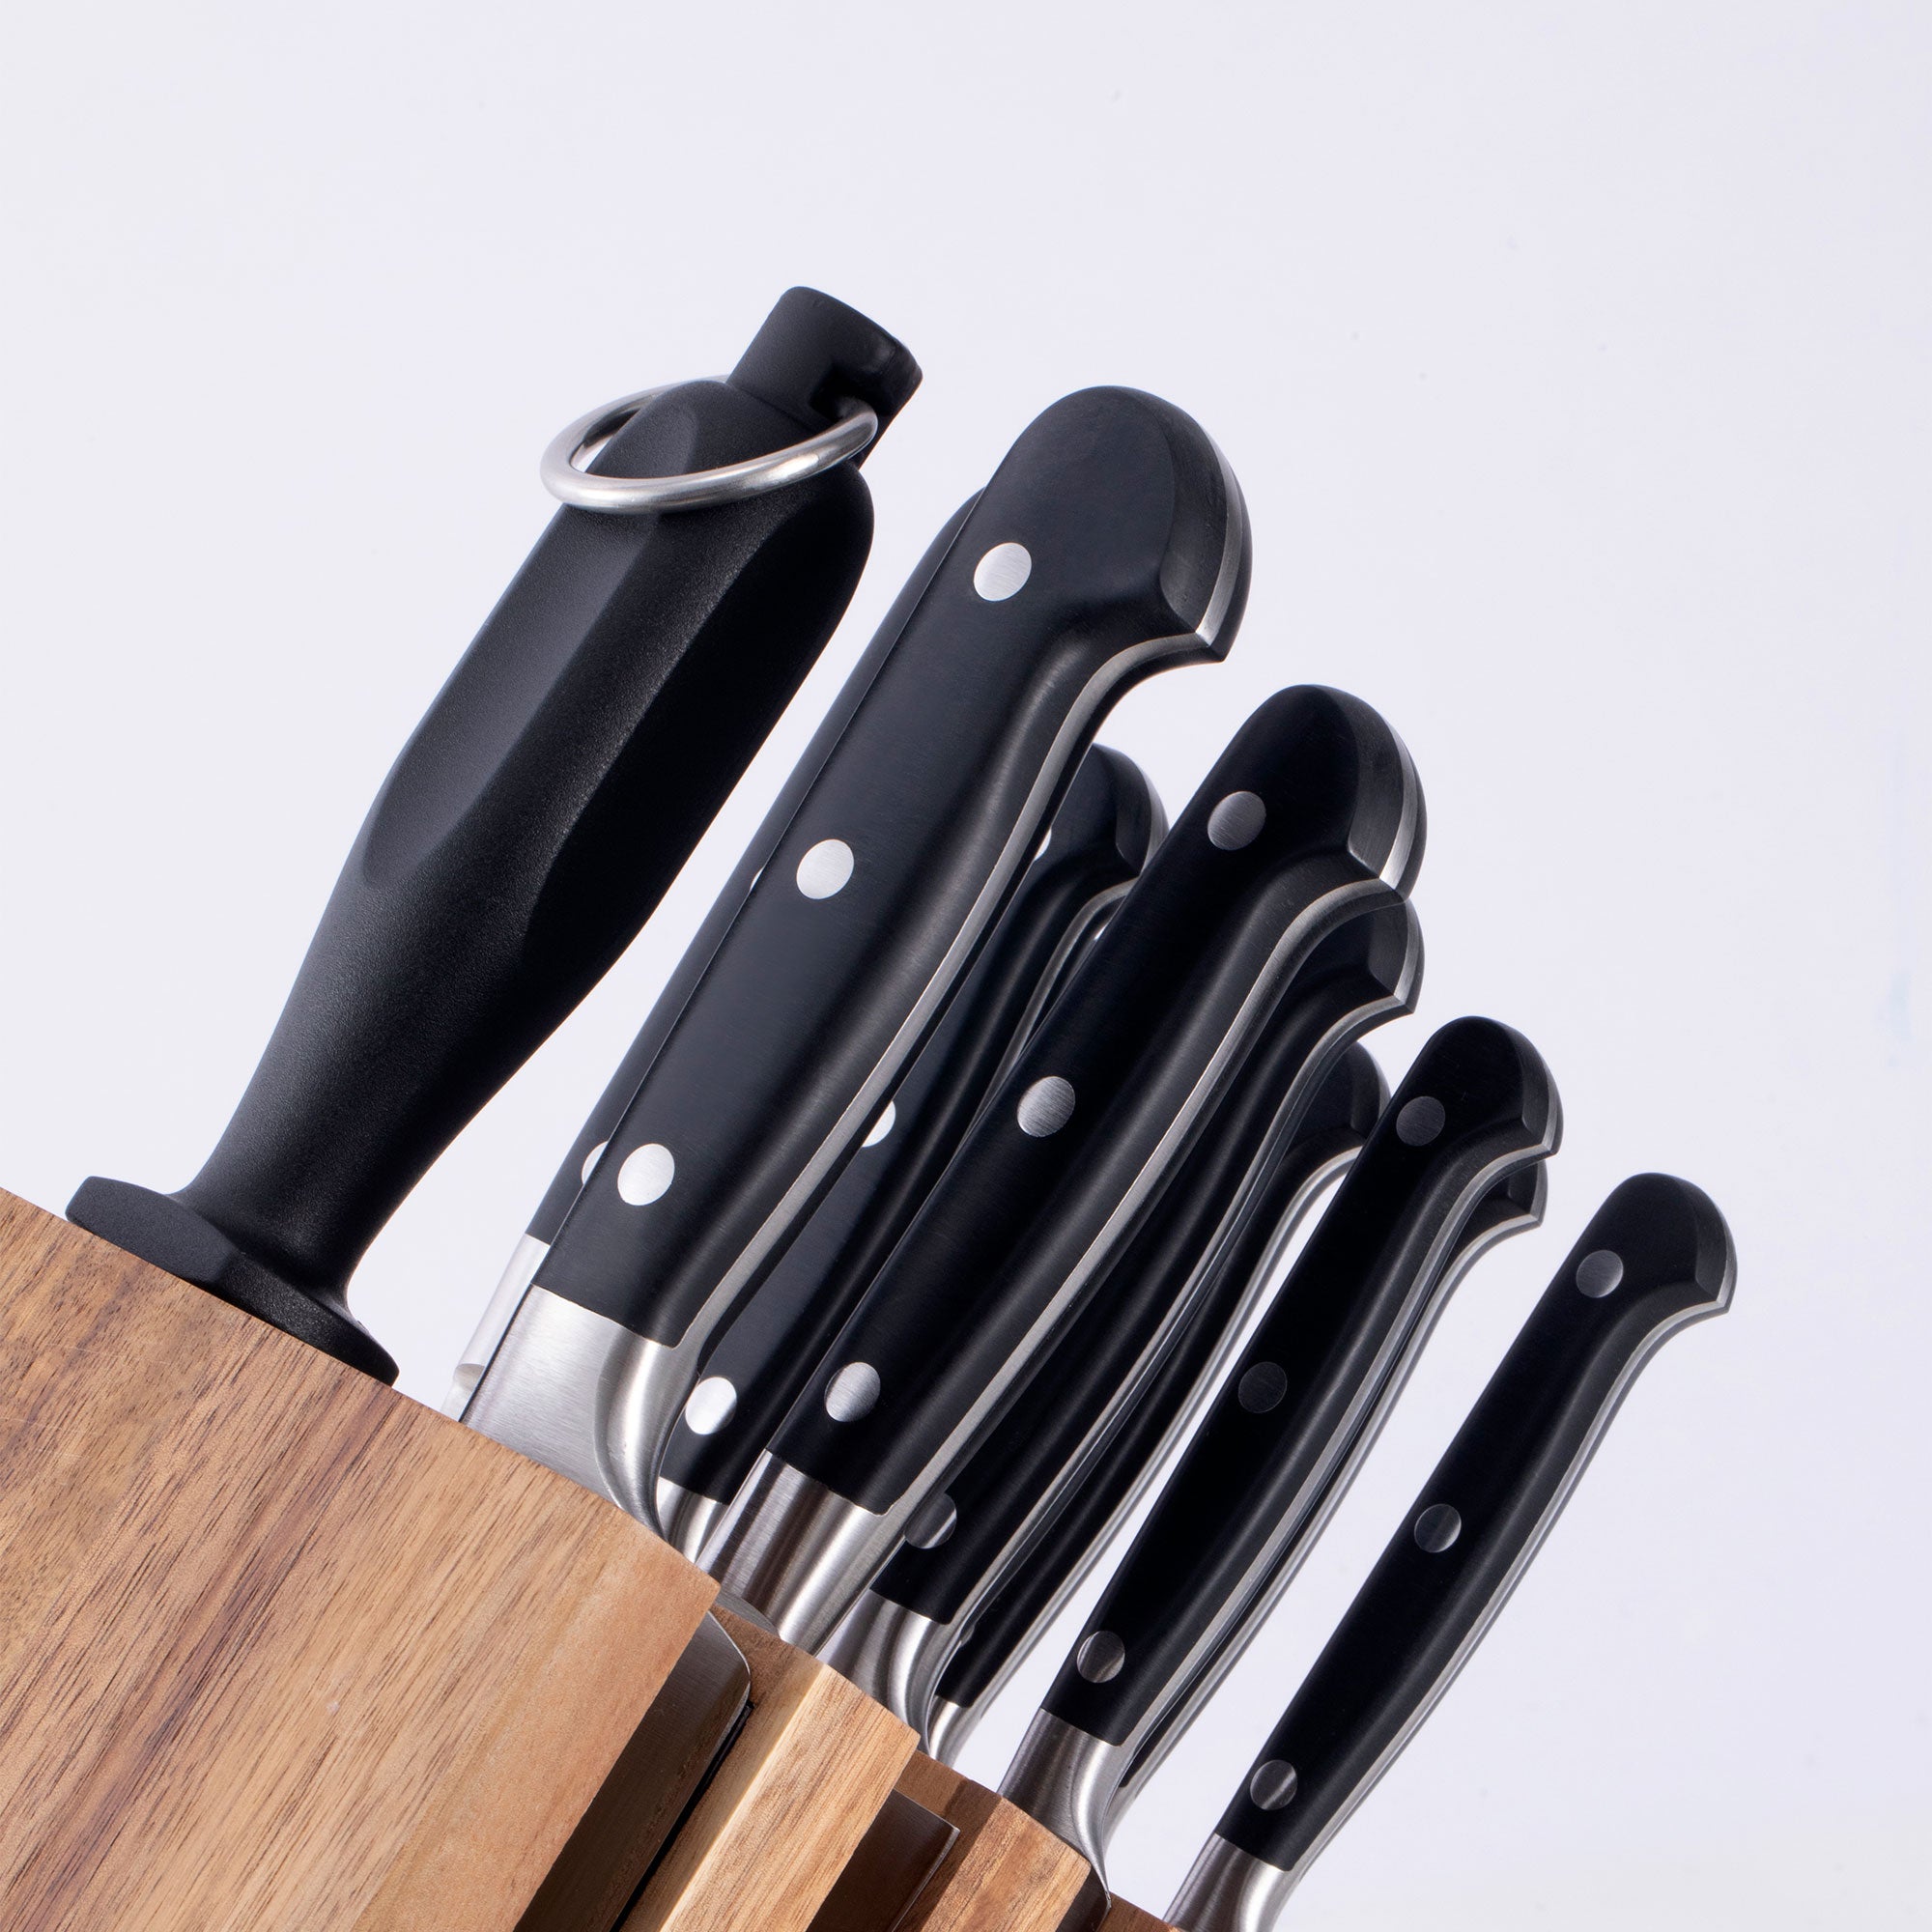 11-Piece Kitchen Knife Block Set